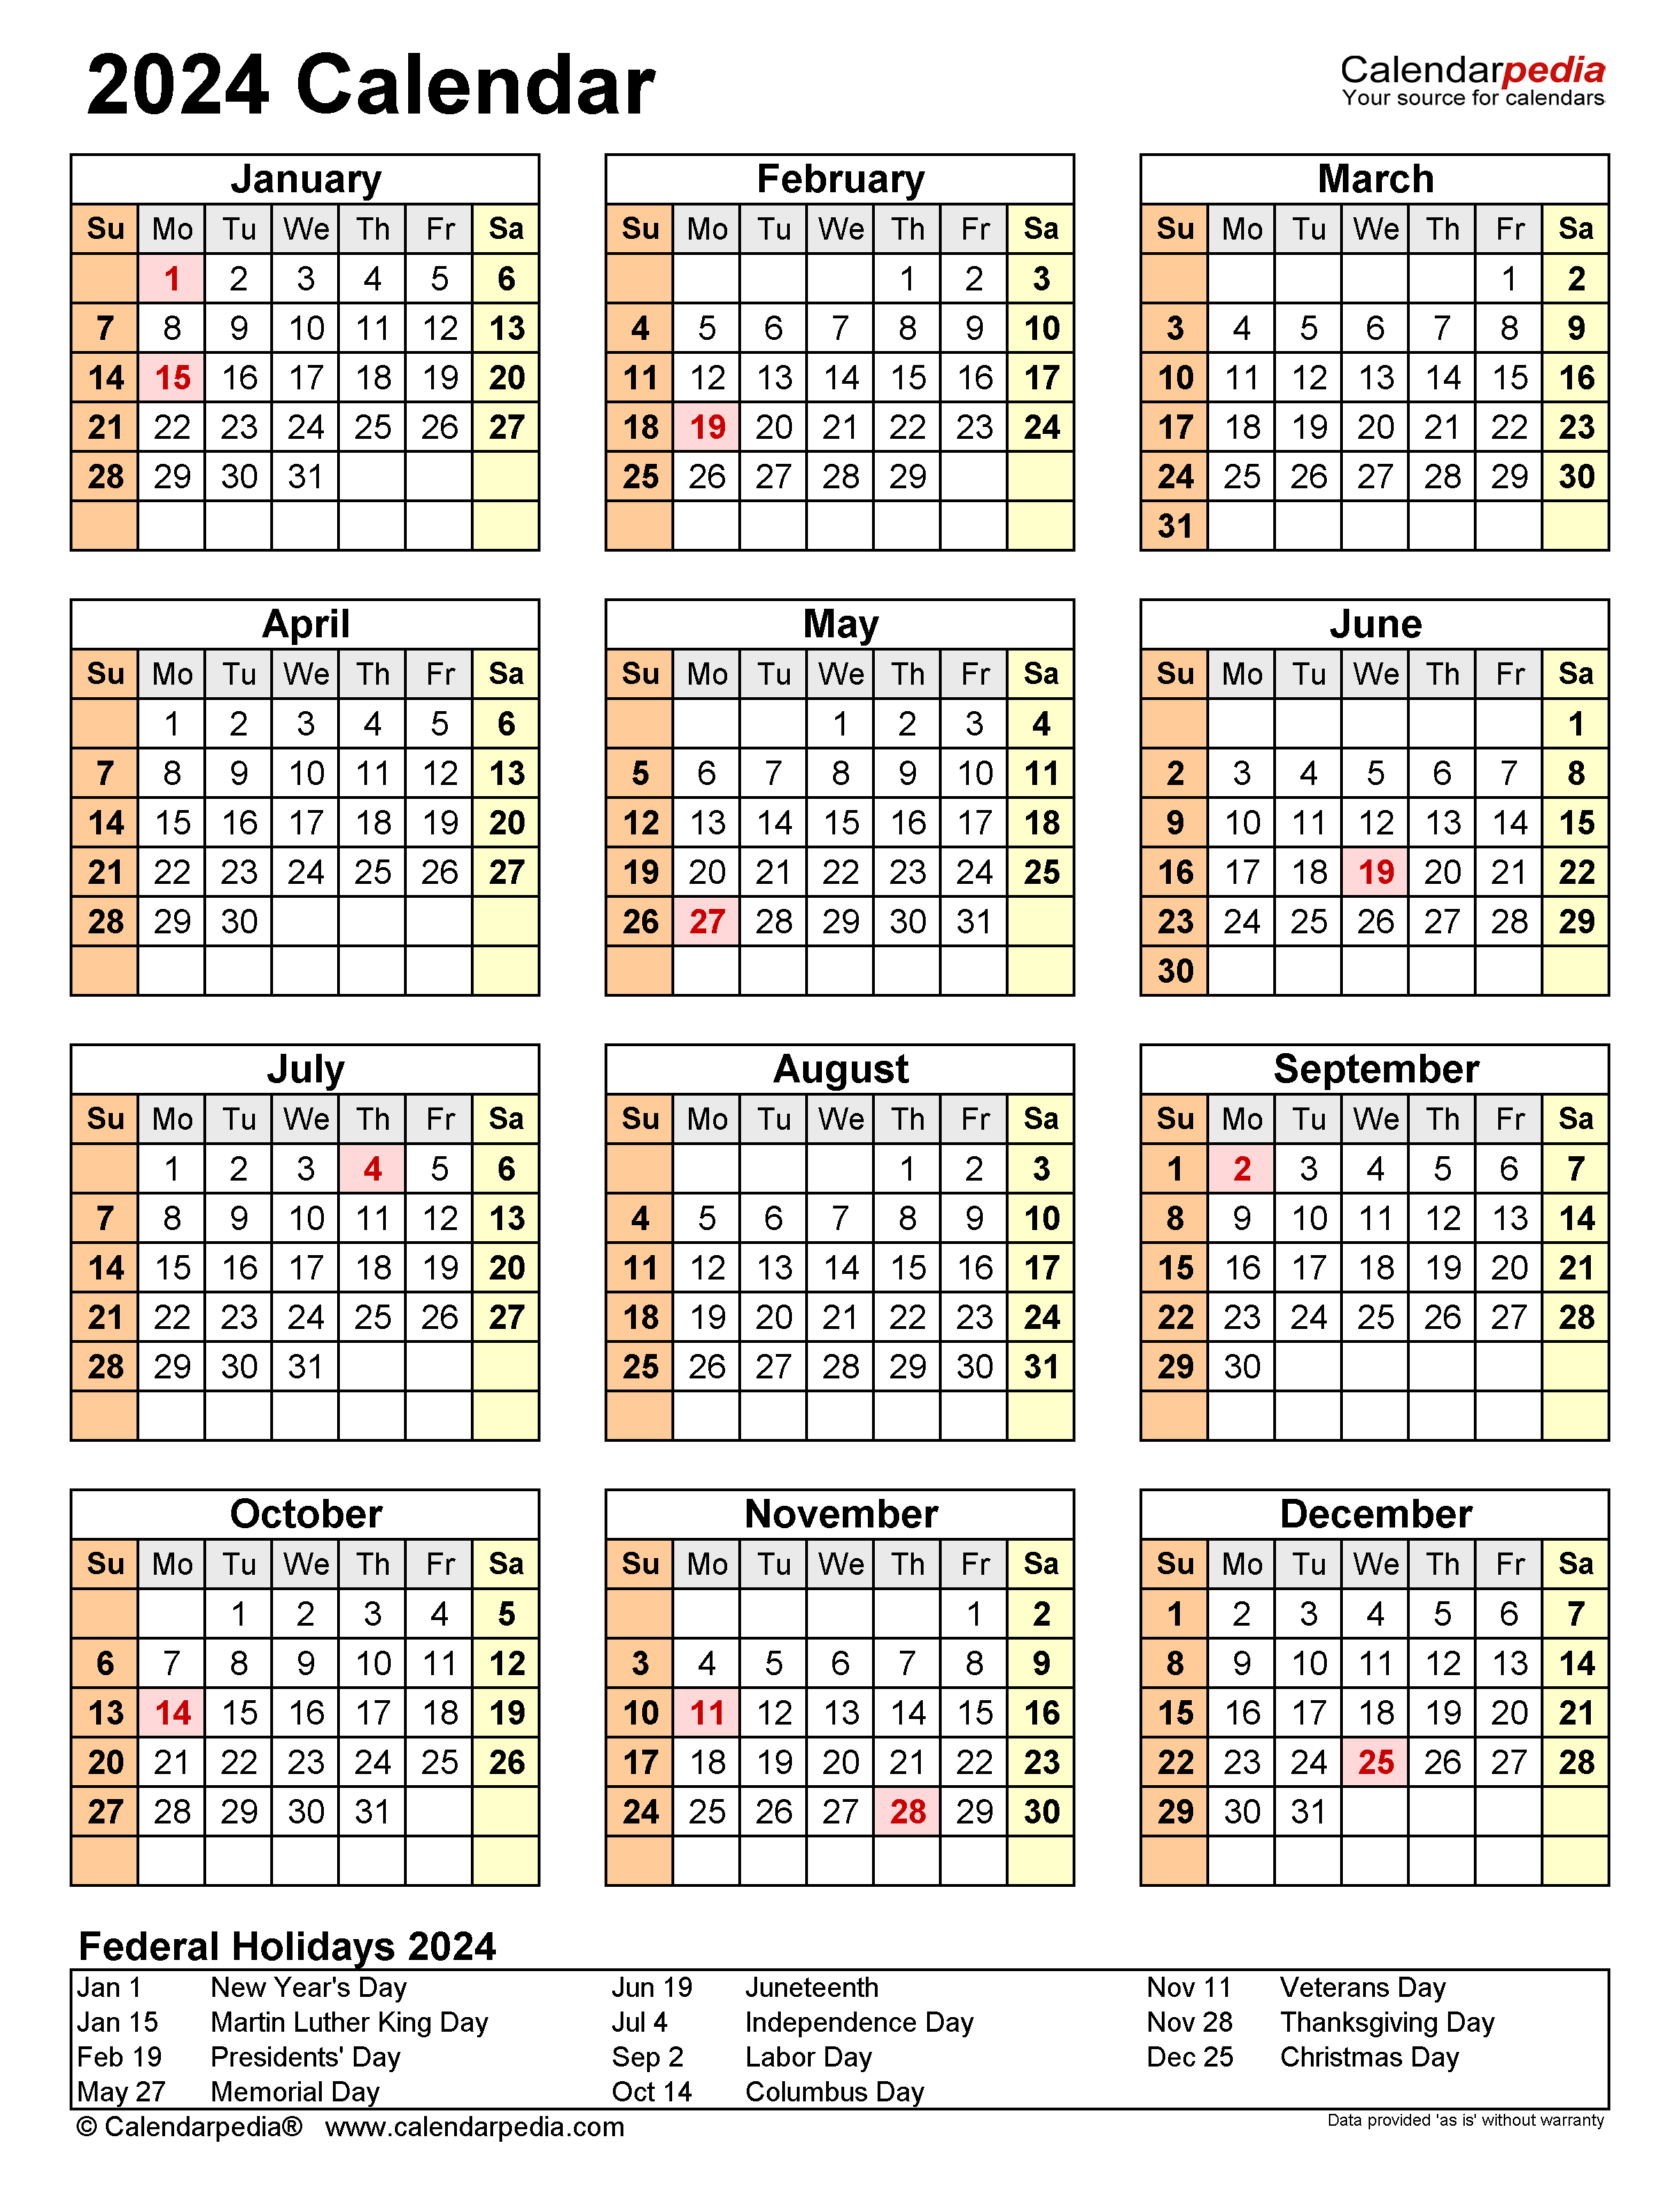 Free Printable 2024 Calendar With Holidays Crownflourmills - Free Printable 2024 Calendar With Holidays Cute